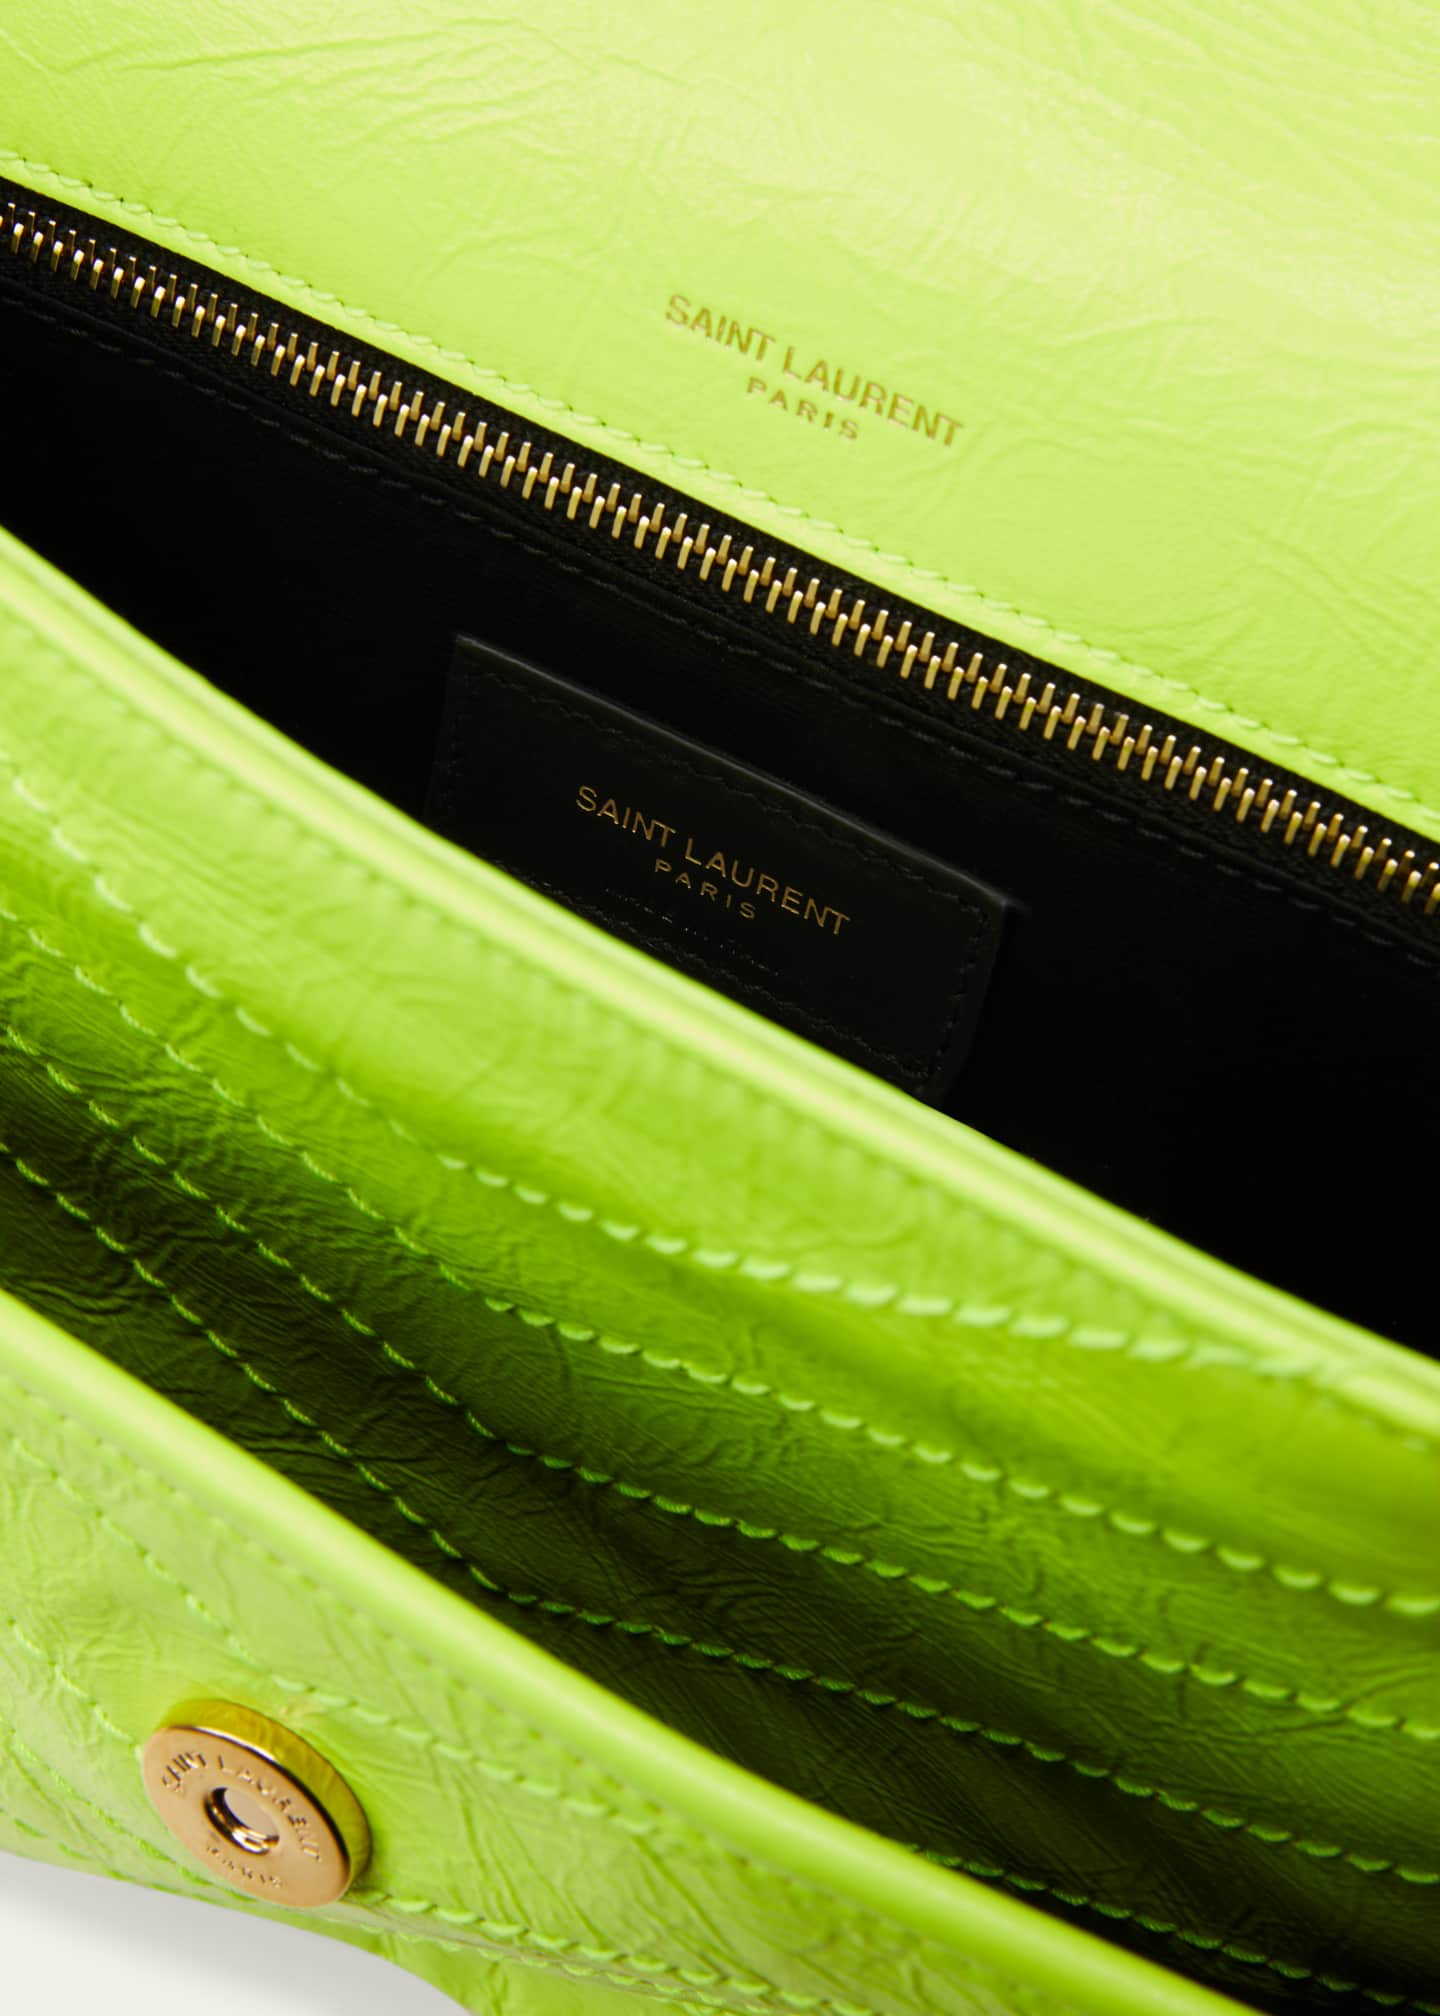 NIKKI Bag Shoulder & Crossbody Bag - Green